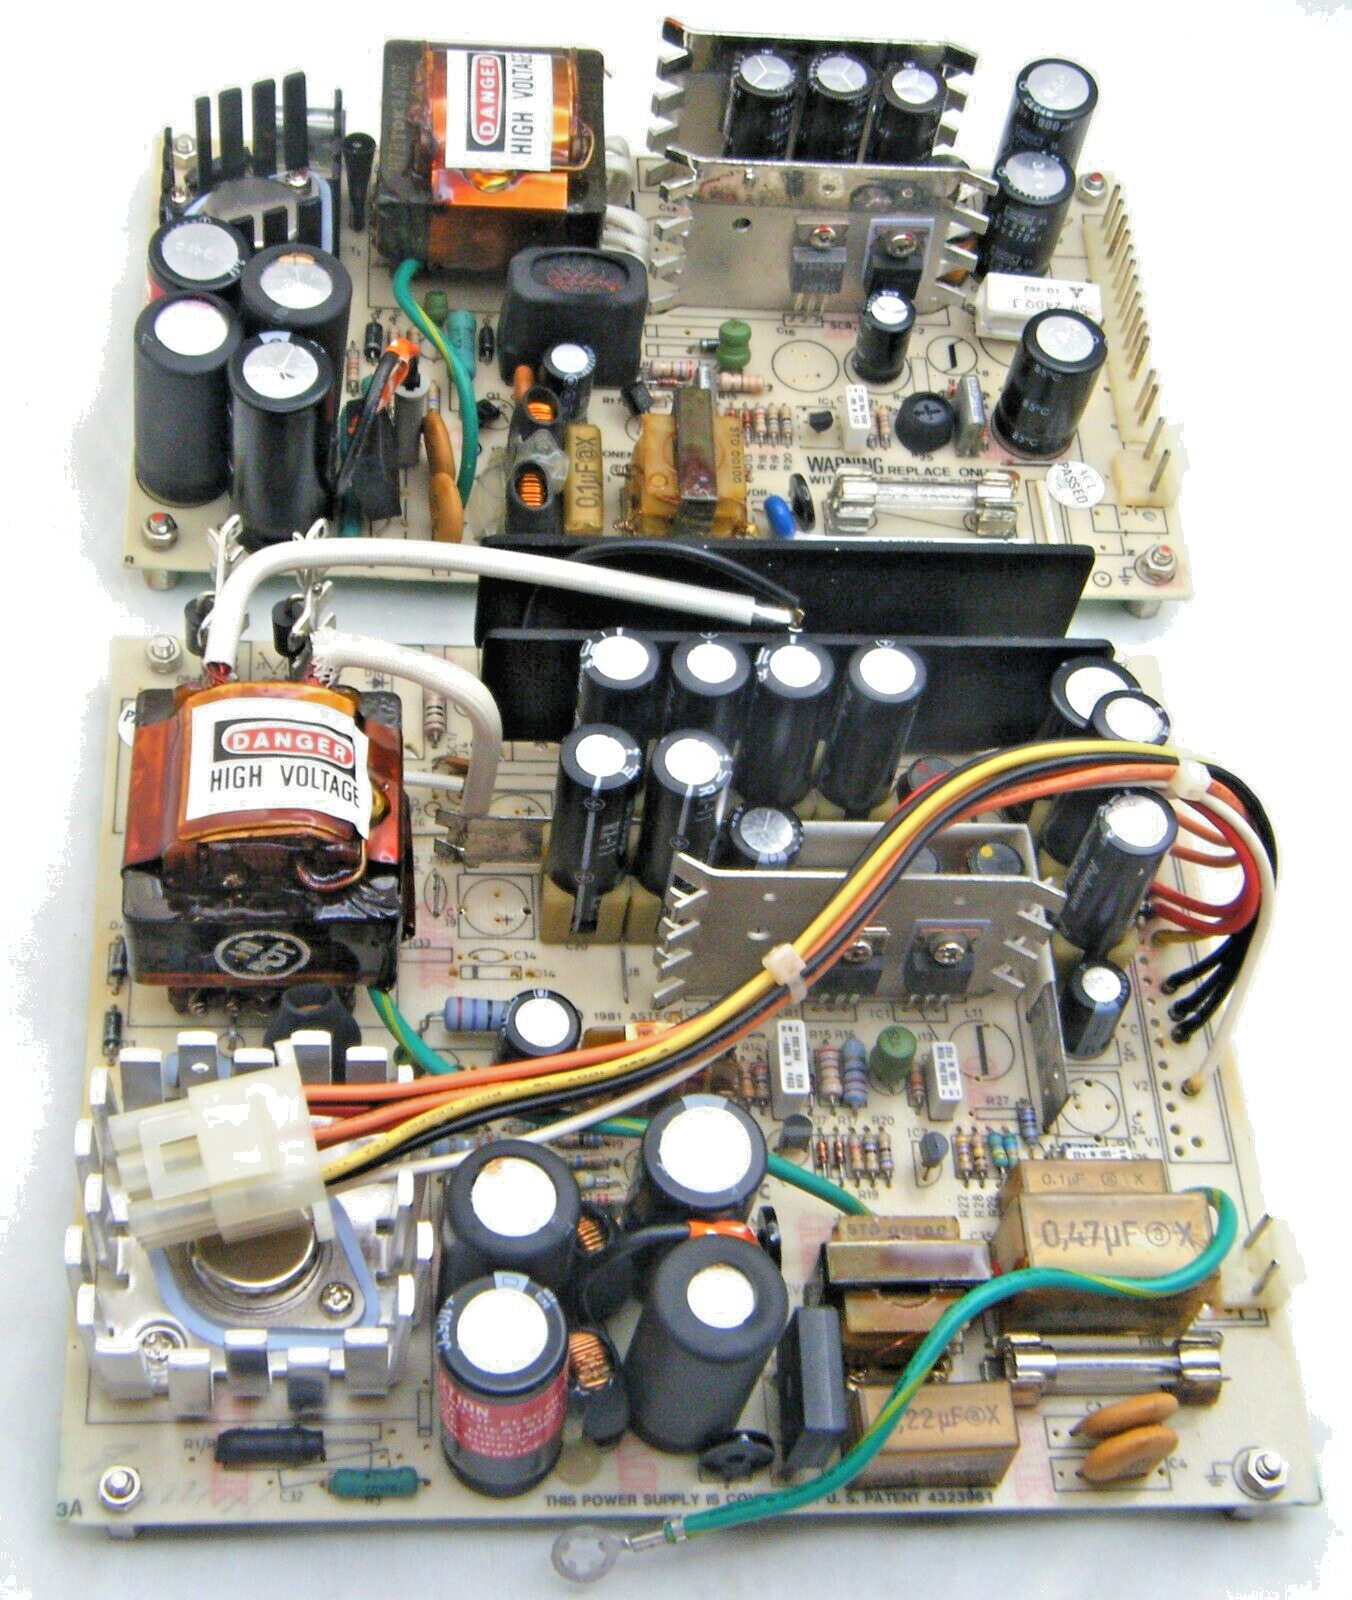 ASTEC Power Supply & Custom Rectifier for Xerox 820-II Personal Computer NOS